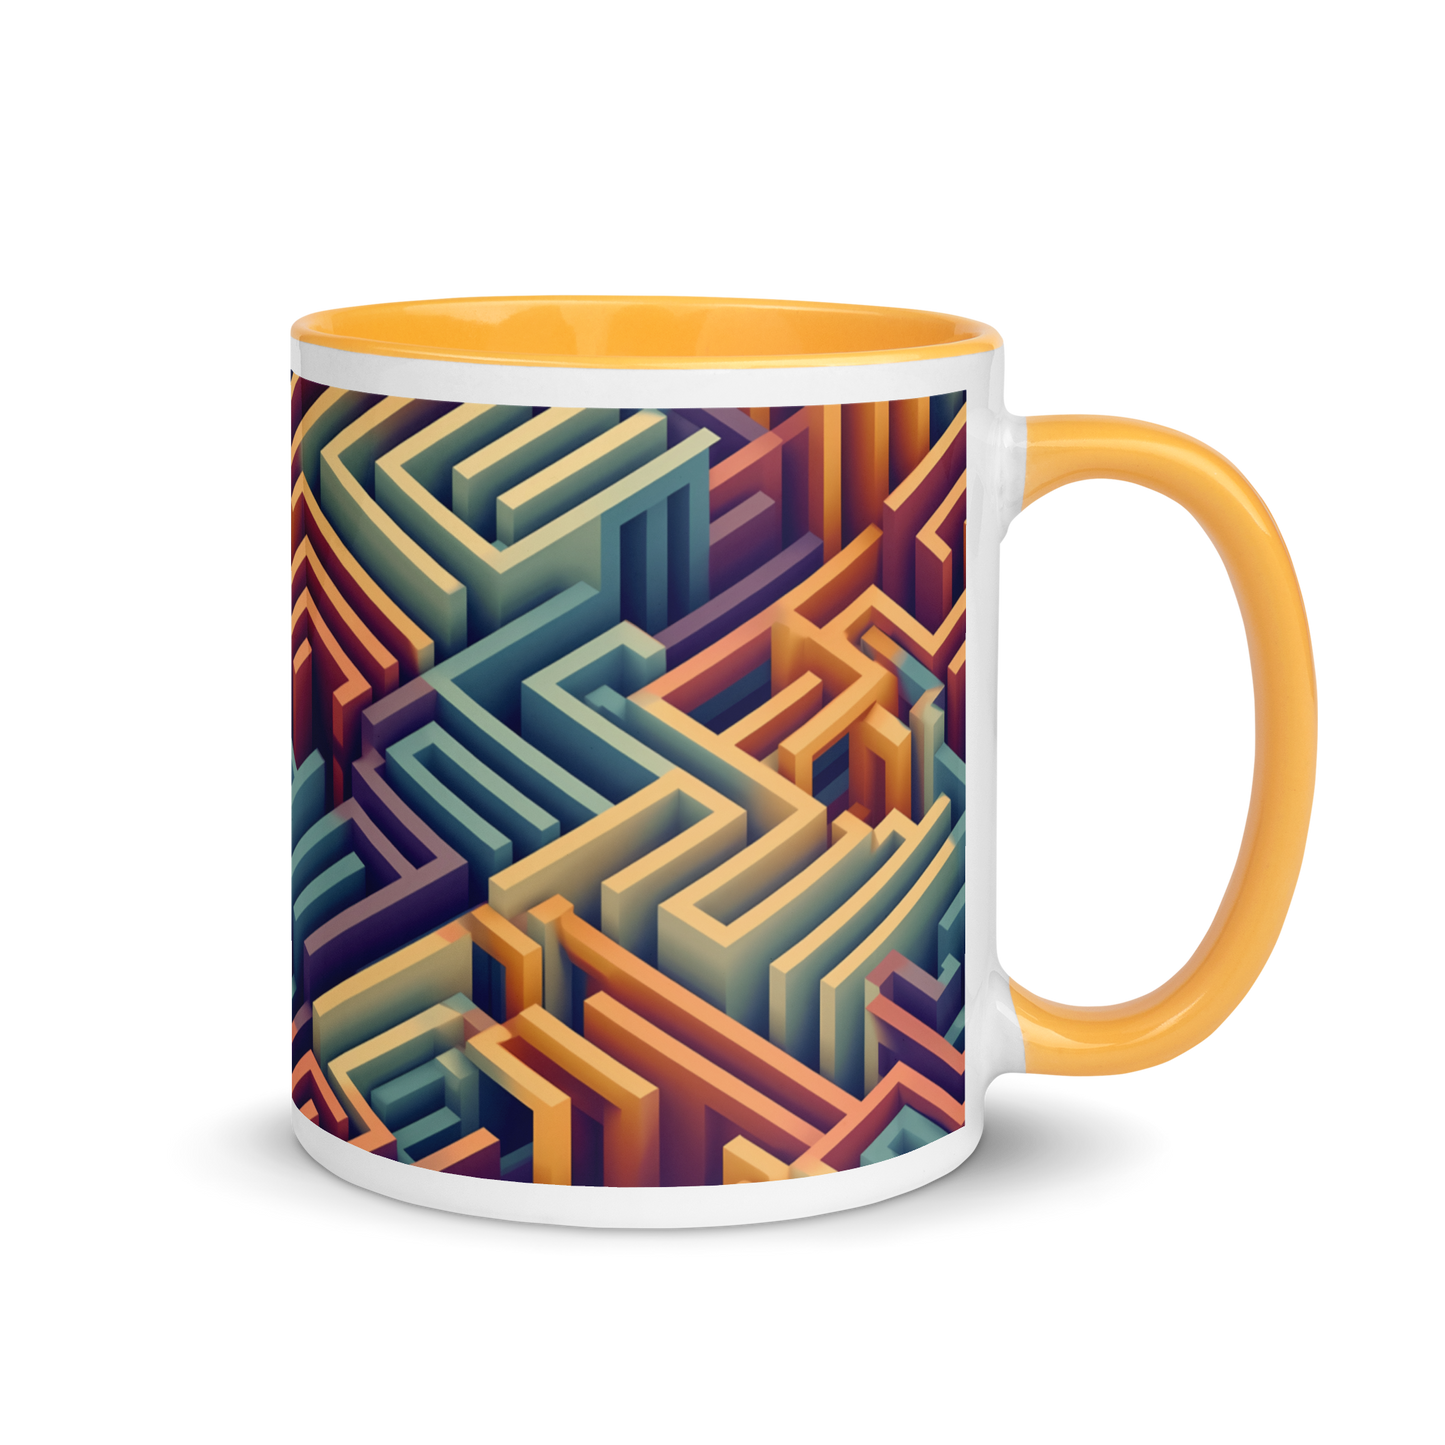 3D Maze Illusion | 3D Patterns | White Ceramic Mug with Color Inside - #3